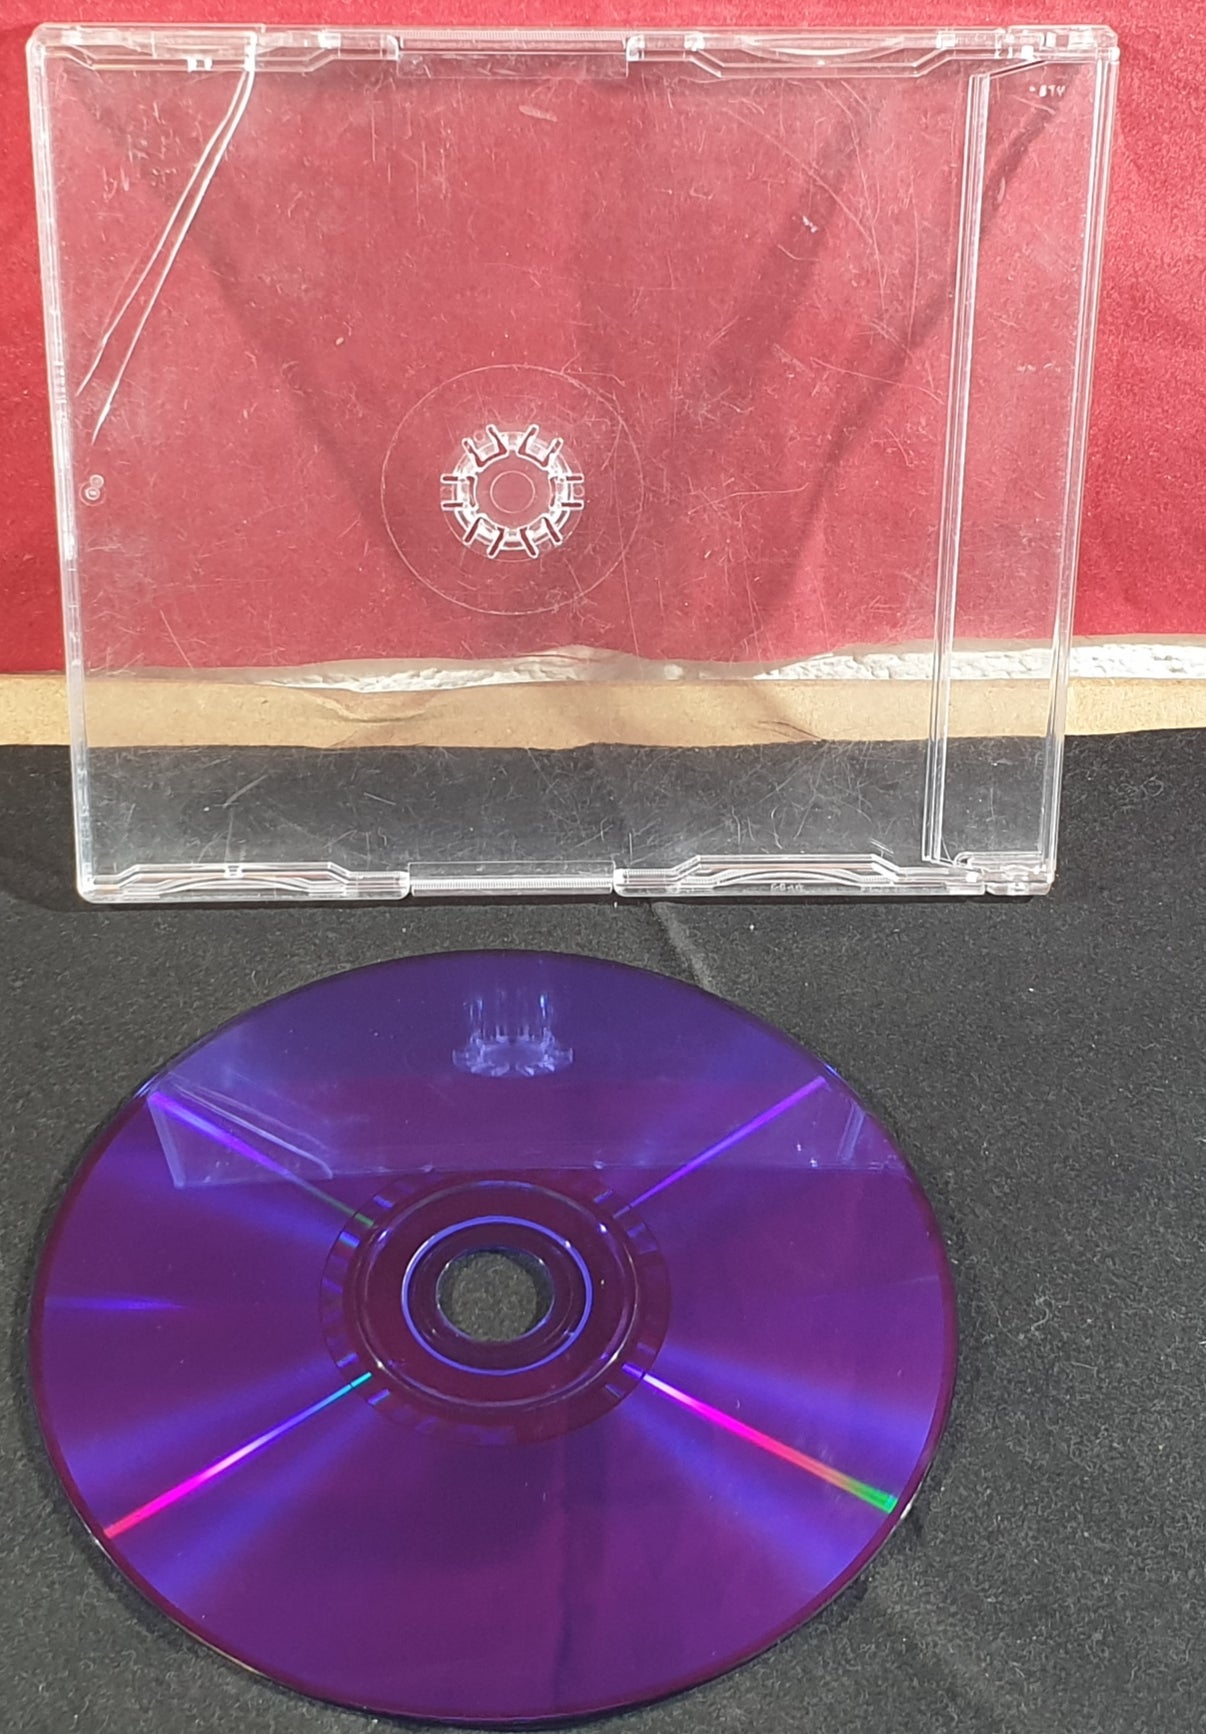 Metal Slug 4 Disc Only Sony Playstation 2 (PS2) Game